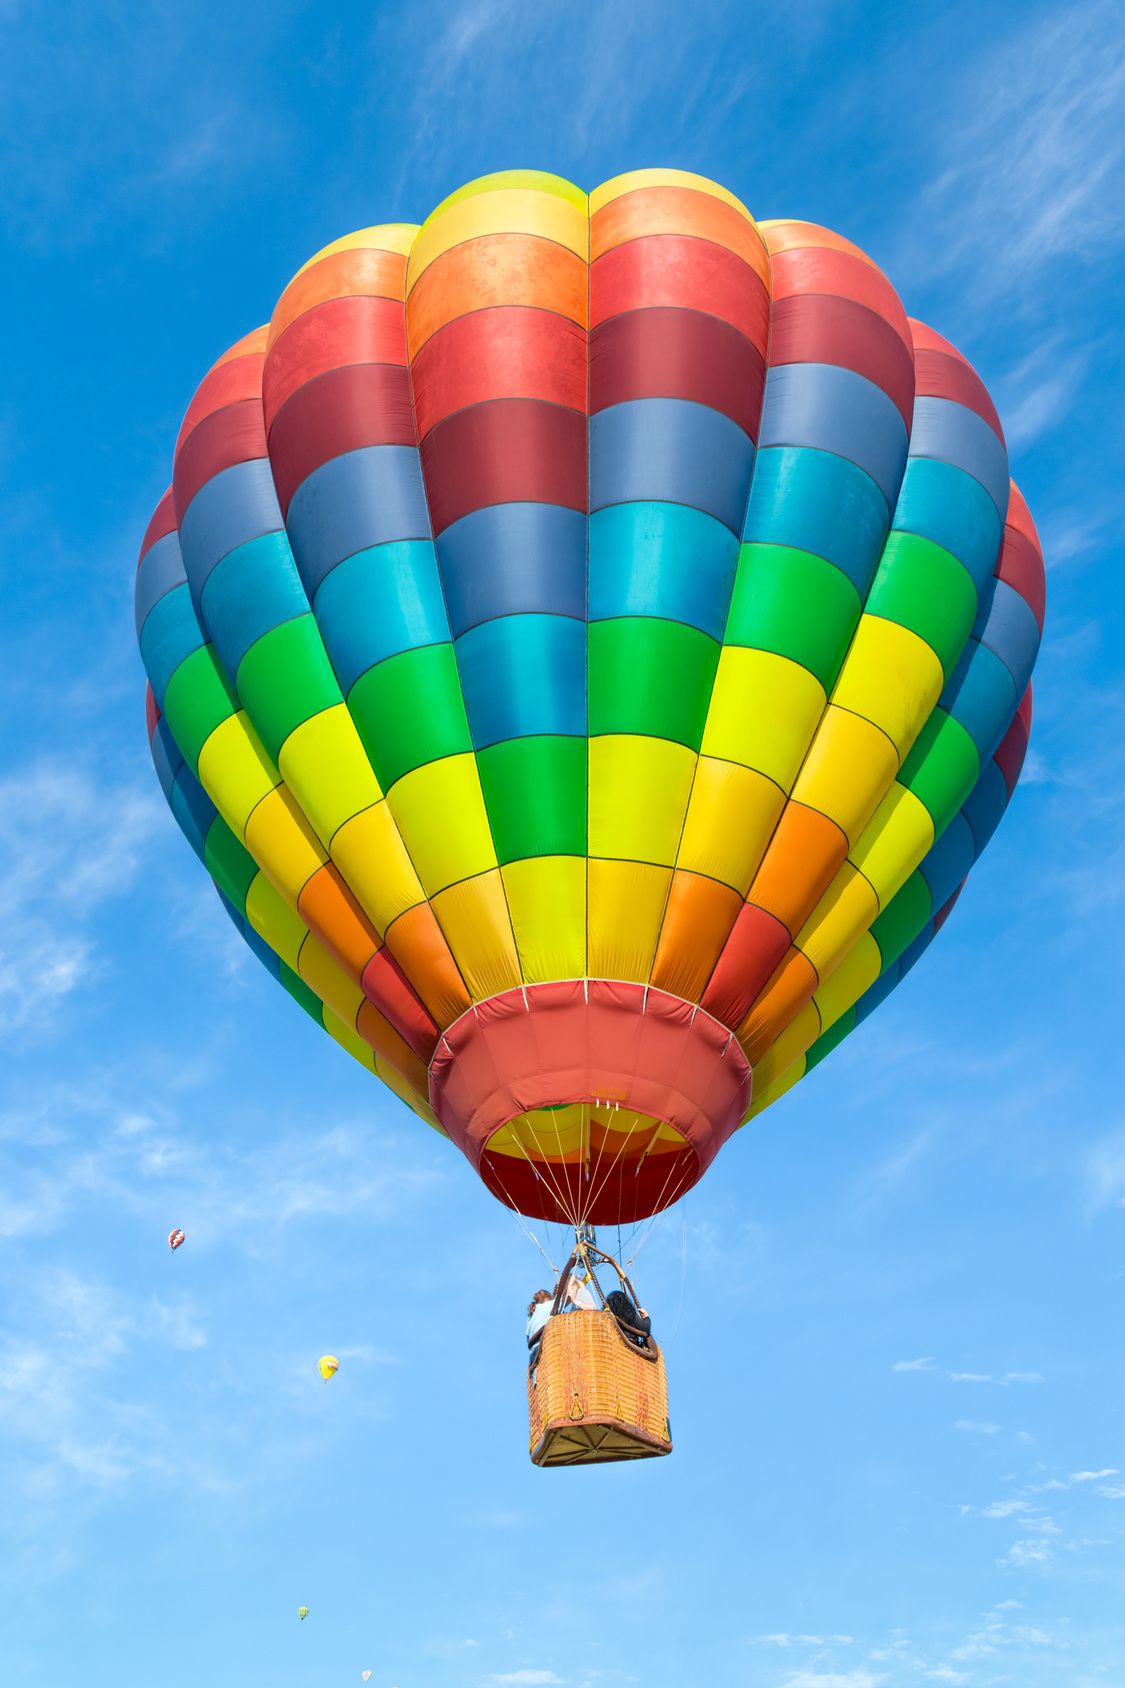 Hot air balloon over blue sky